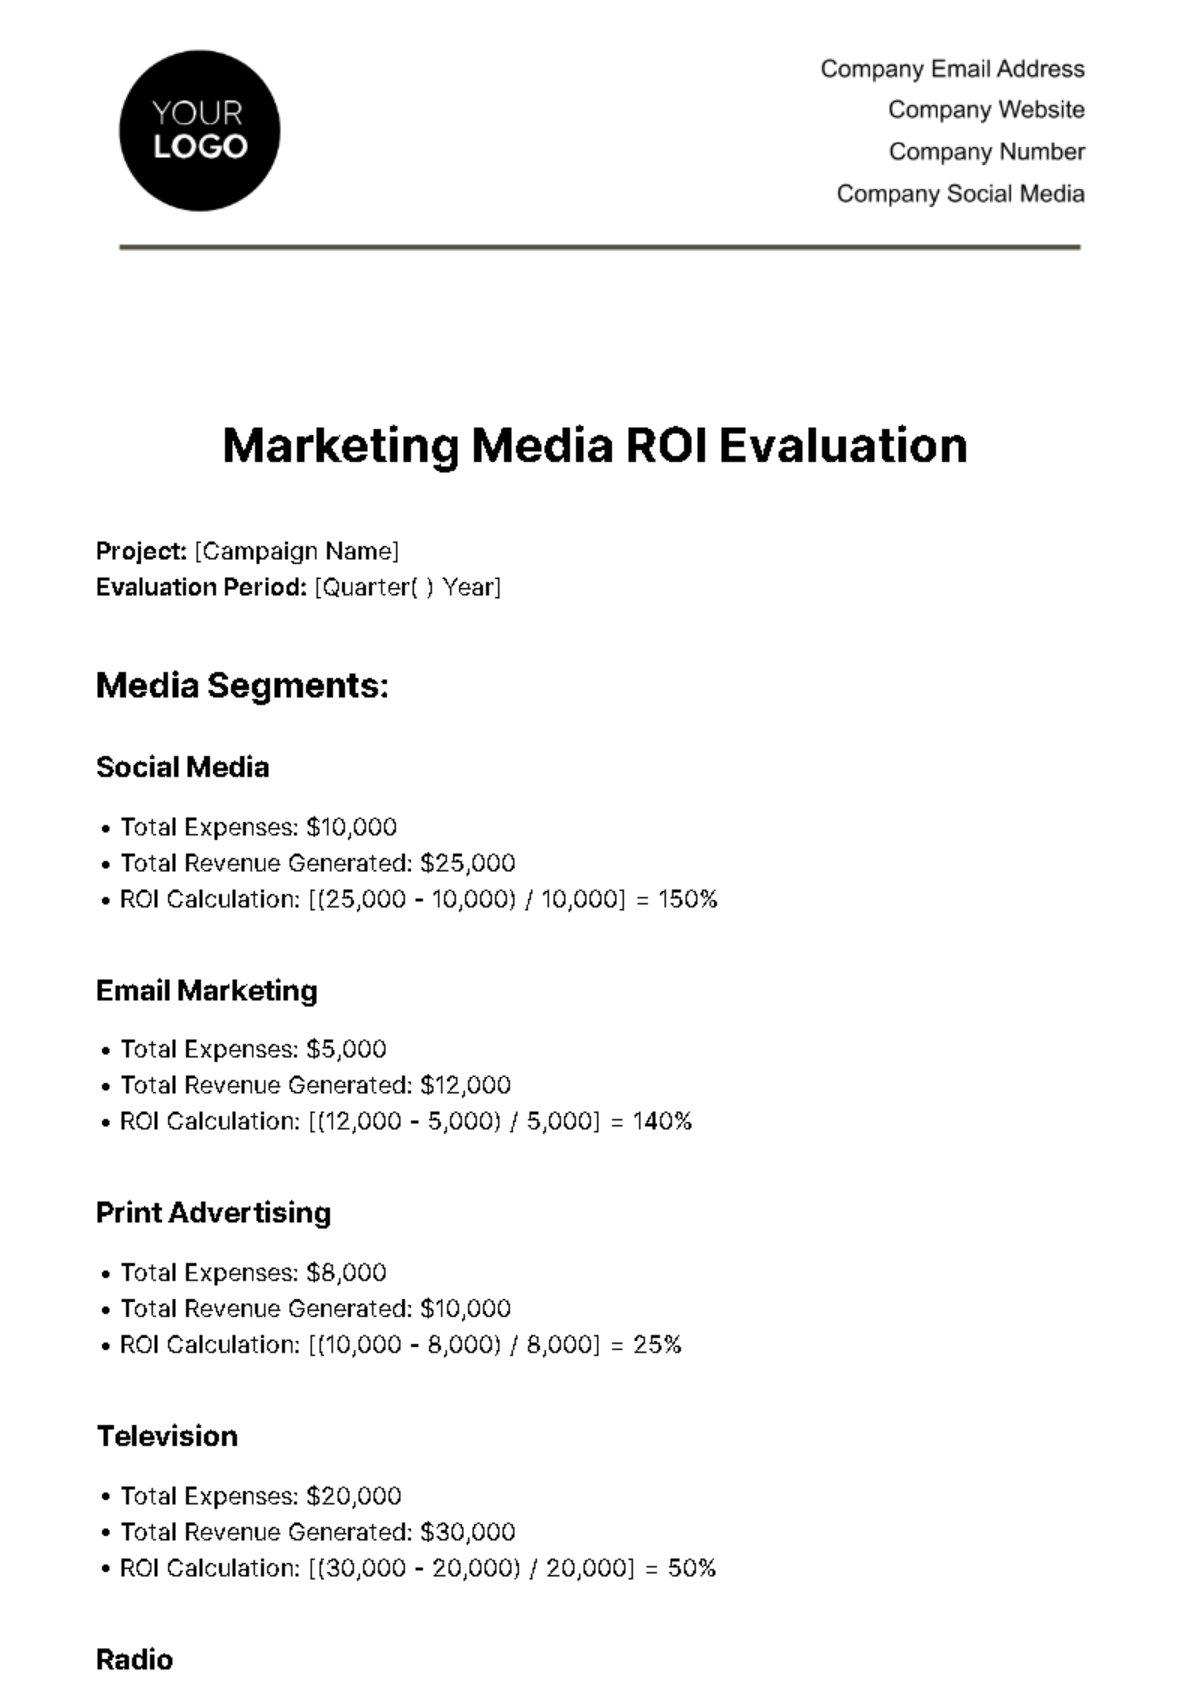 Free Marketing Media ROI Evaluation Template